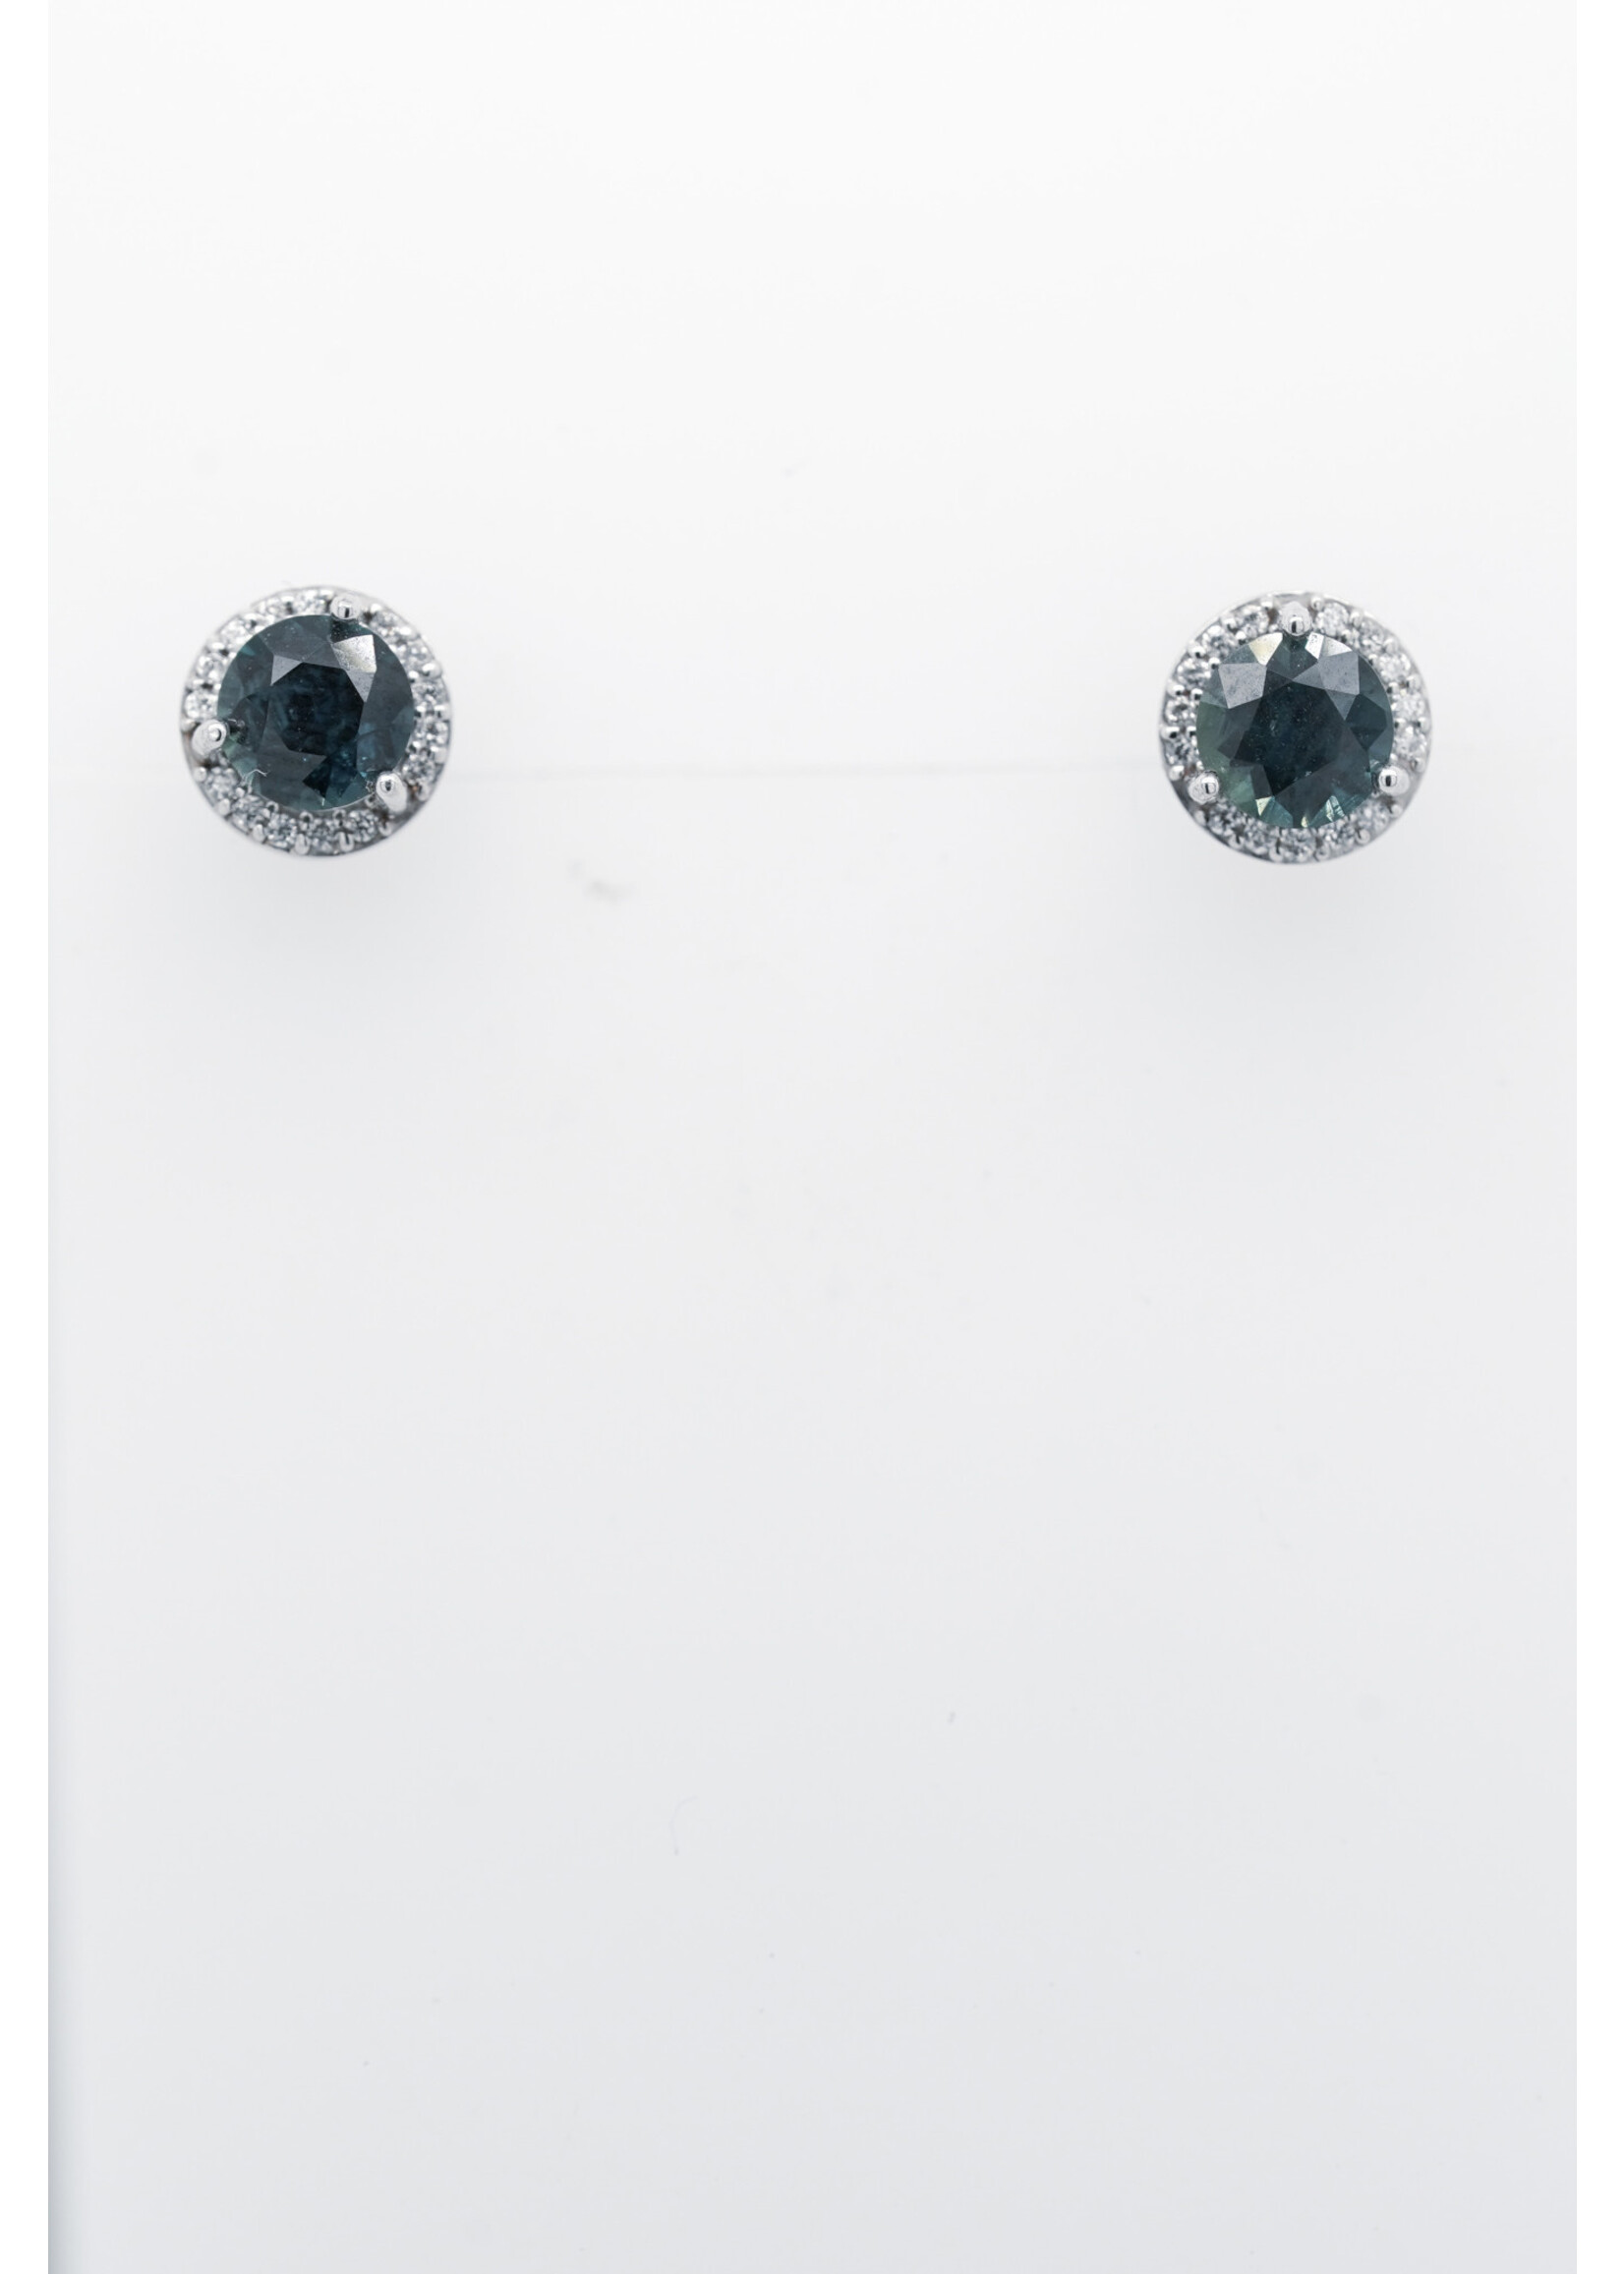 14KW 1.52g 1.30ctw (1.18ctrs) Teal Sapphire & Diamond Halo Stud Earrings